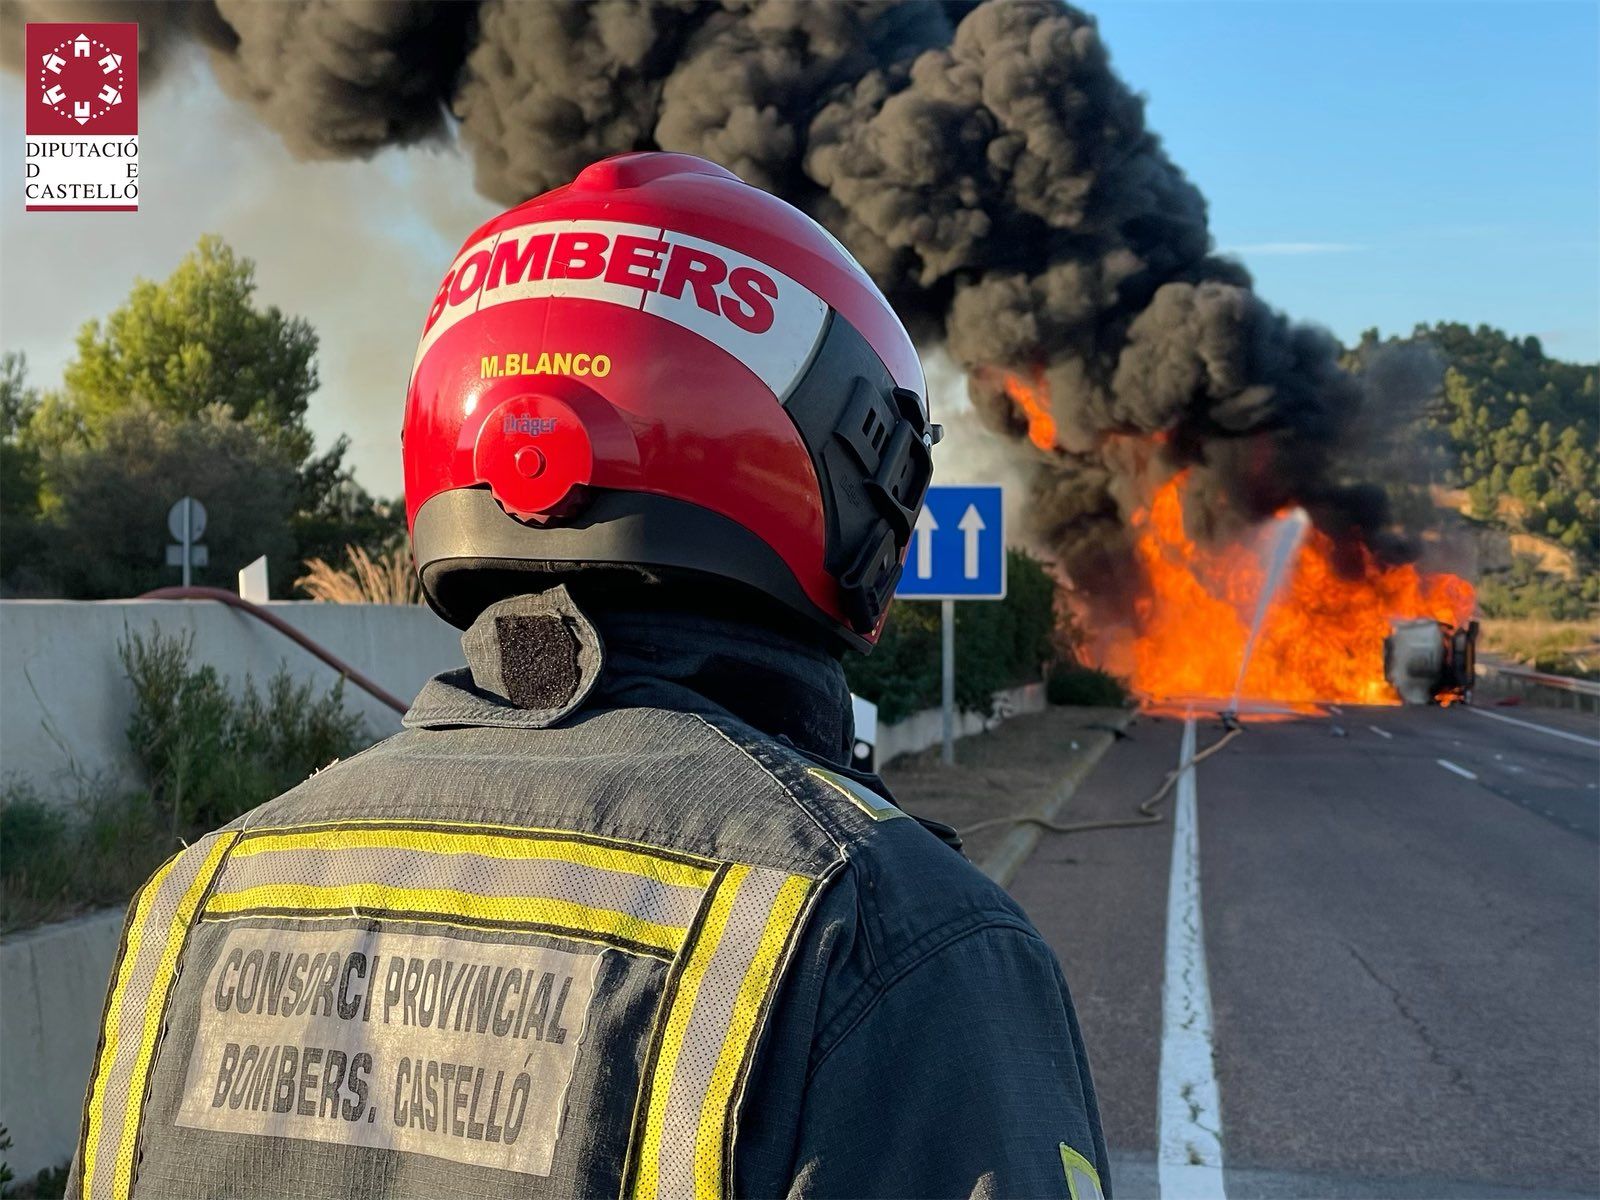 Un camión cargado con gasoil se incendia tras un accidente en Castelló